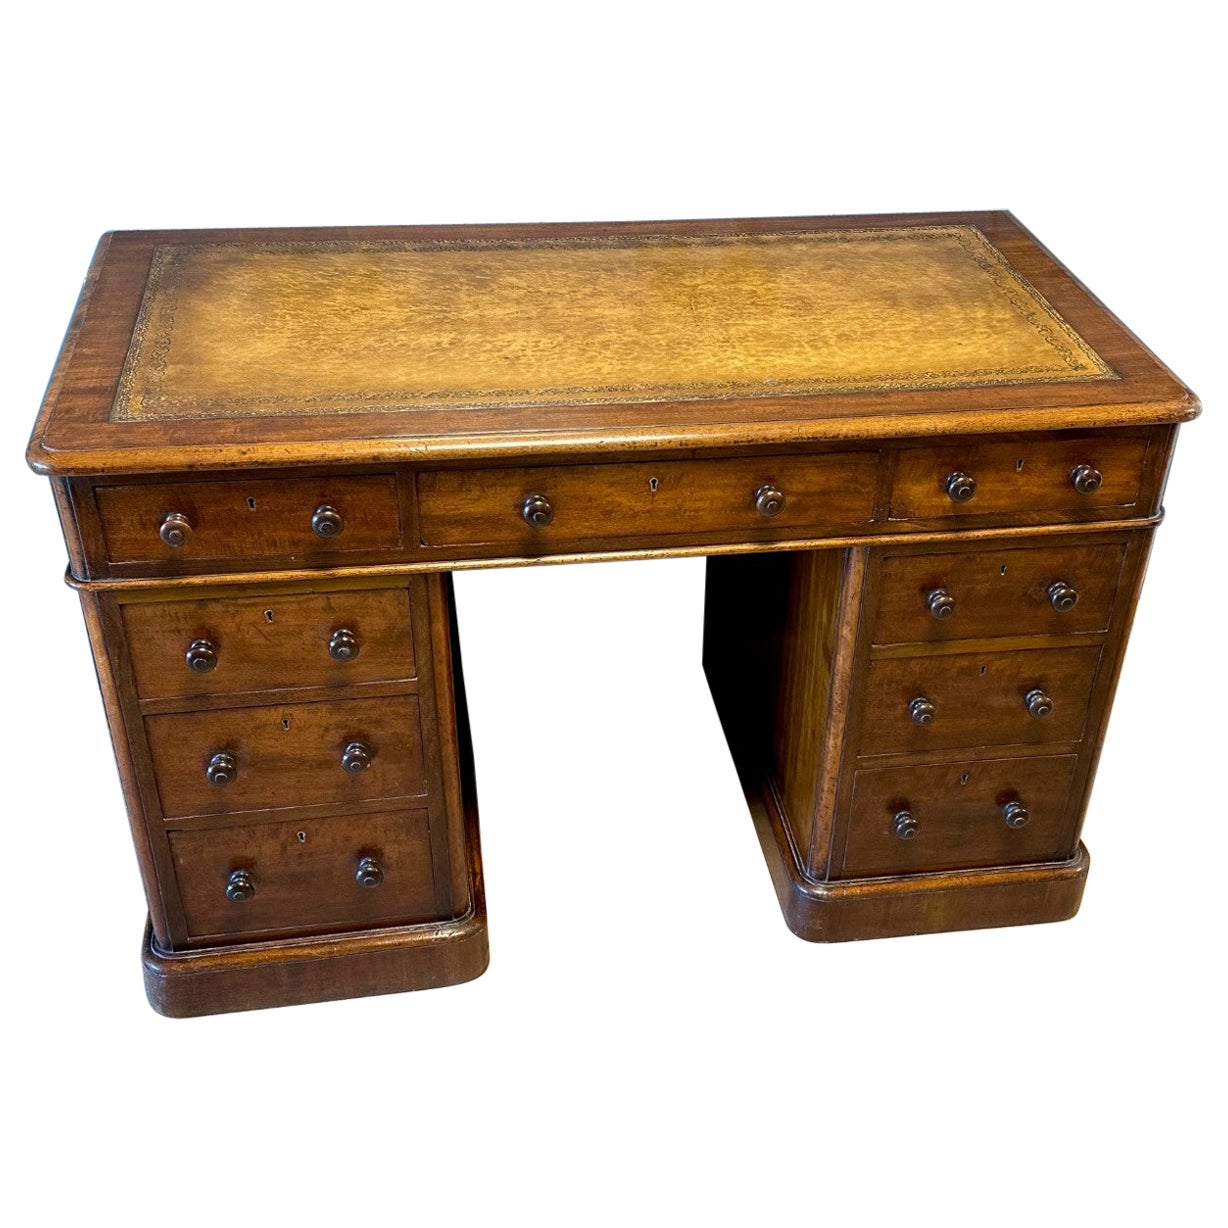 Antique Desk from maker Maple & Co